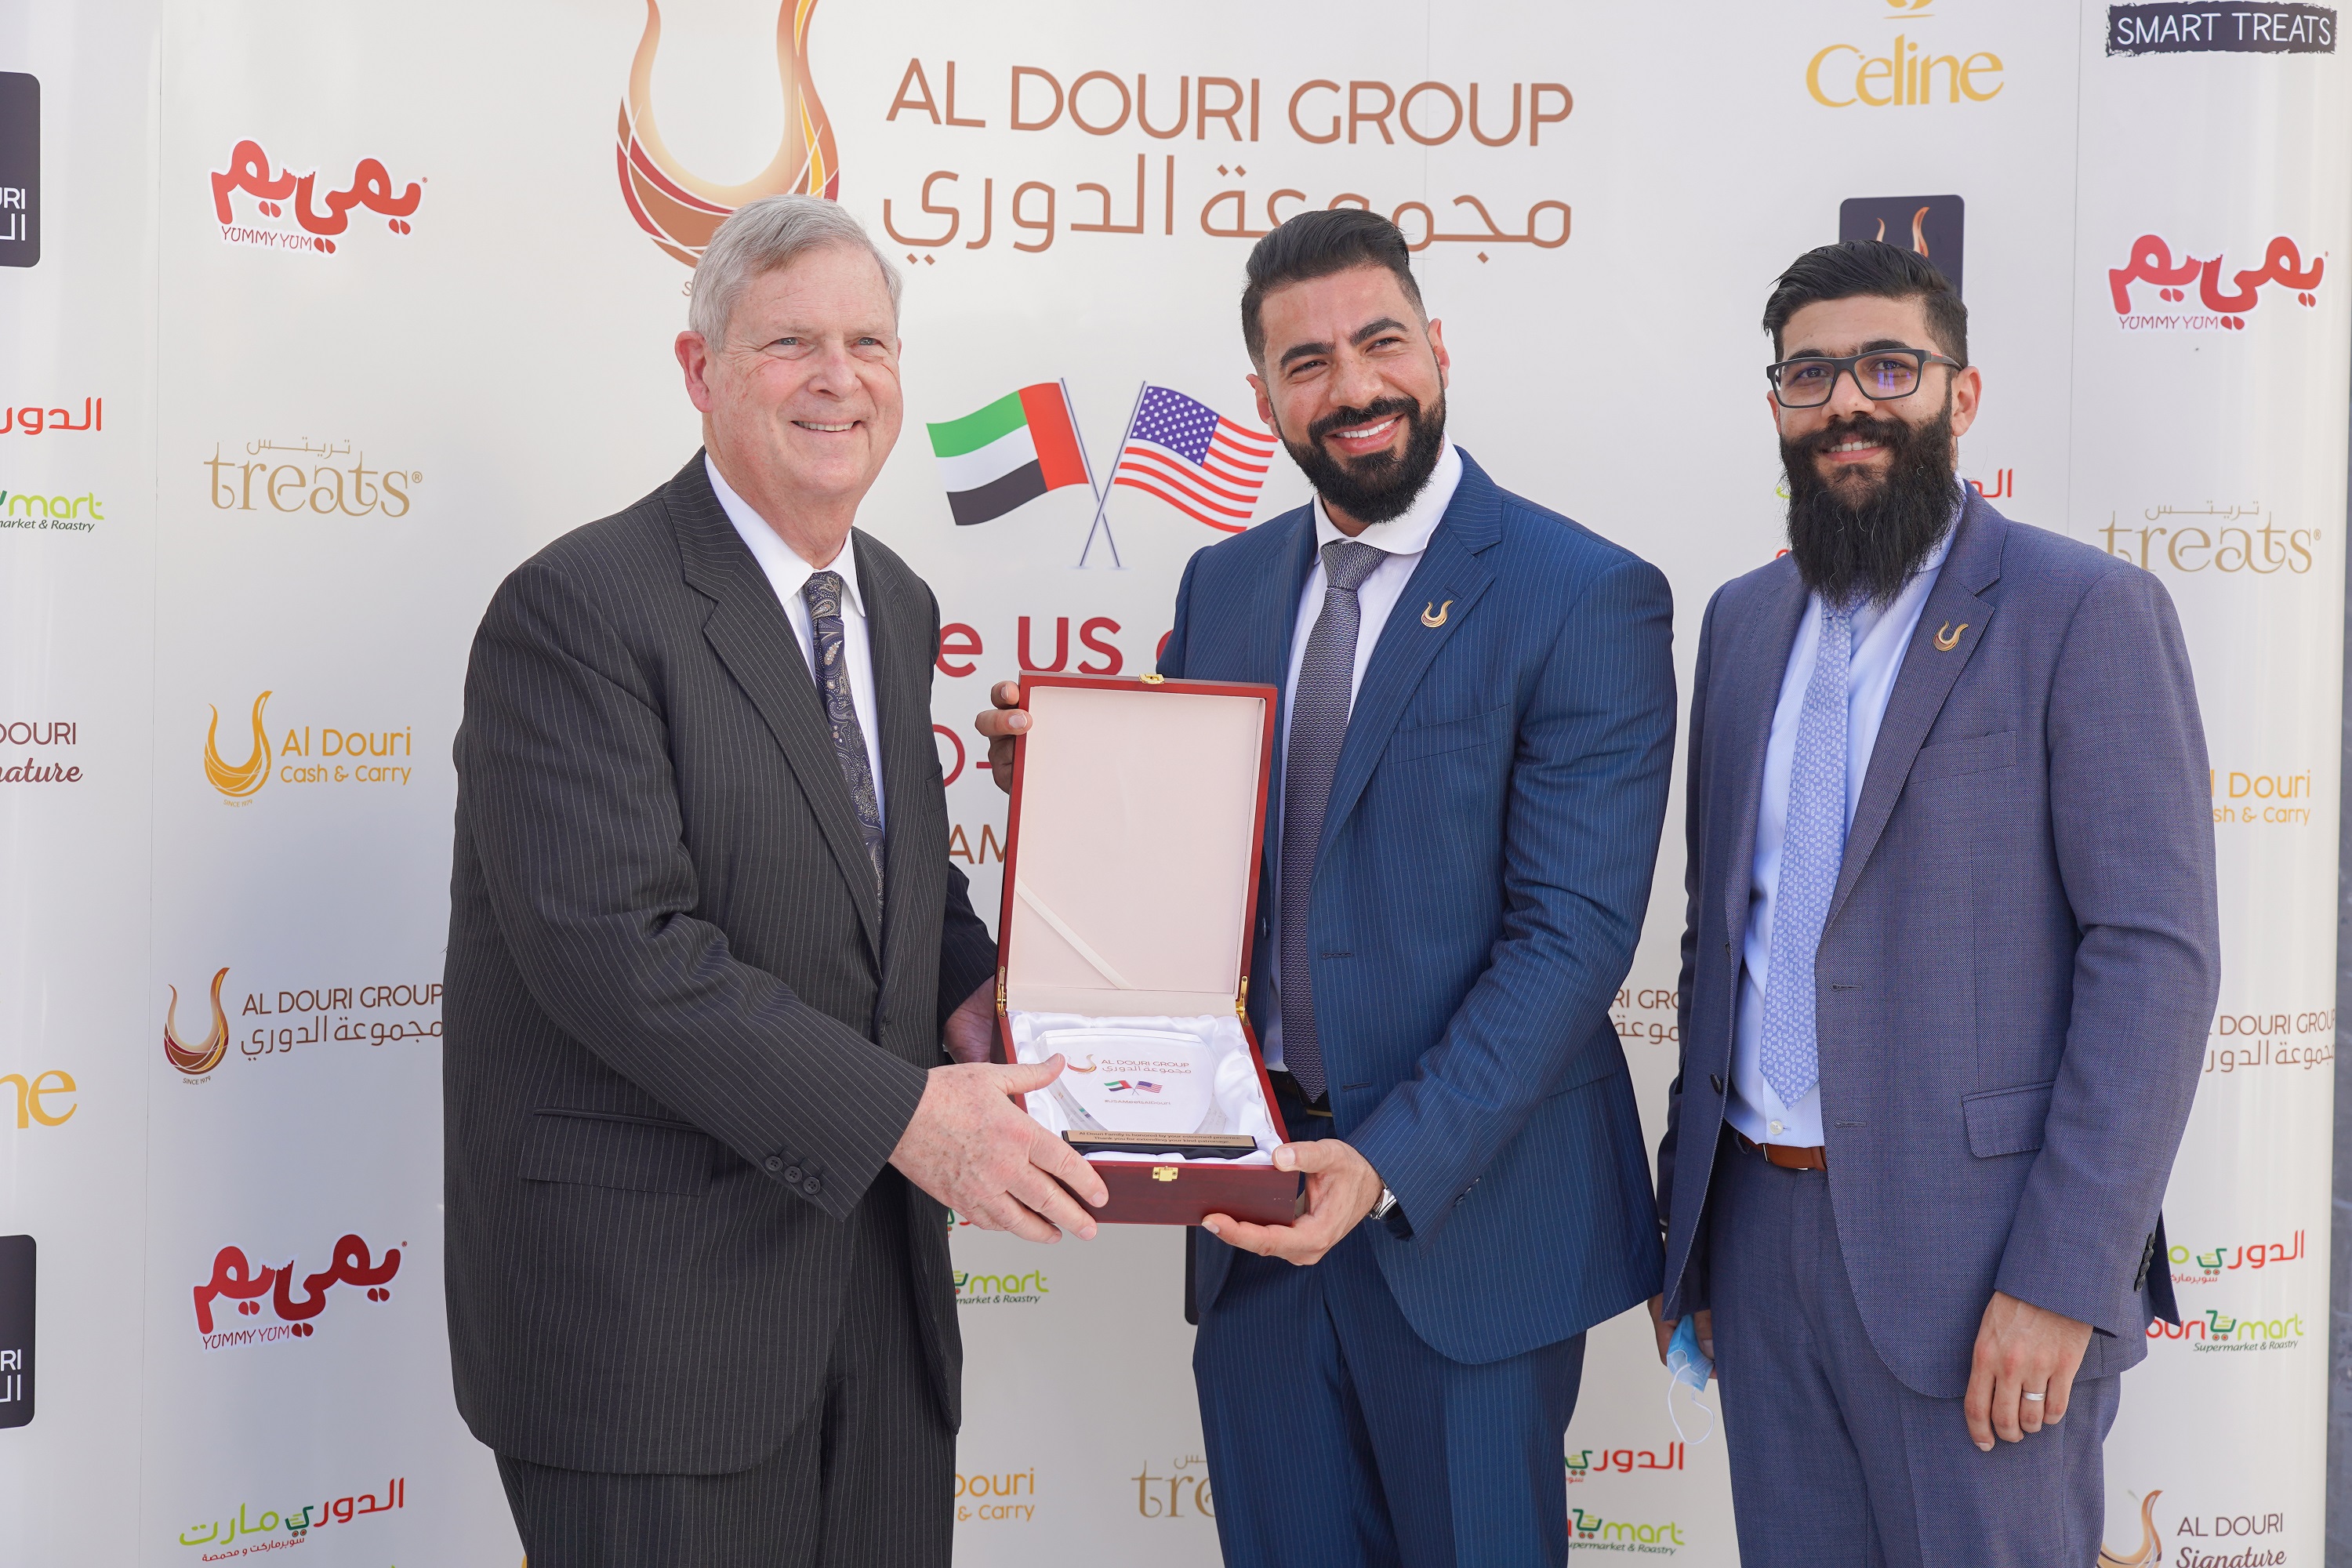 U.S. AG secretary Tom Vilsack visits Al Douri Group